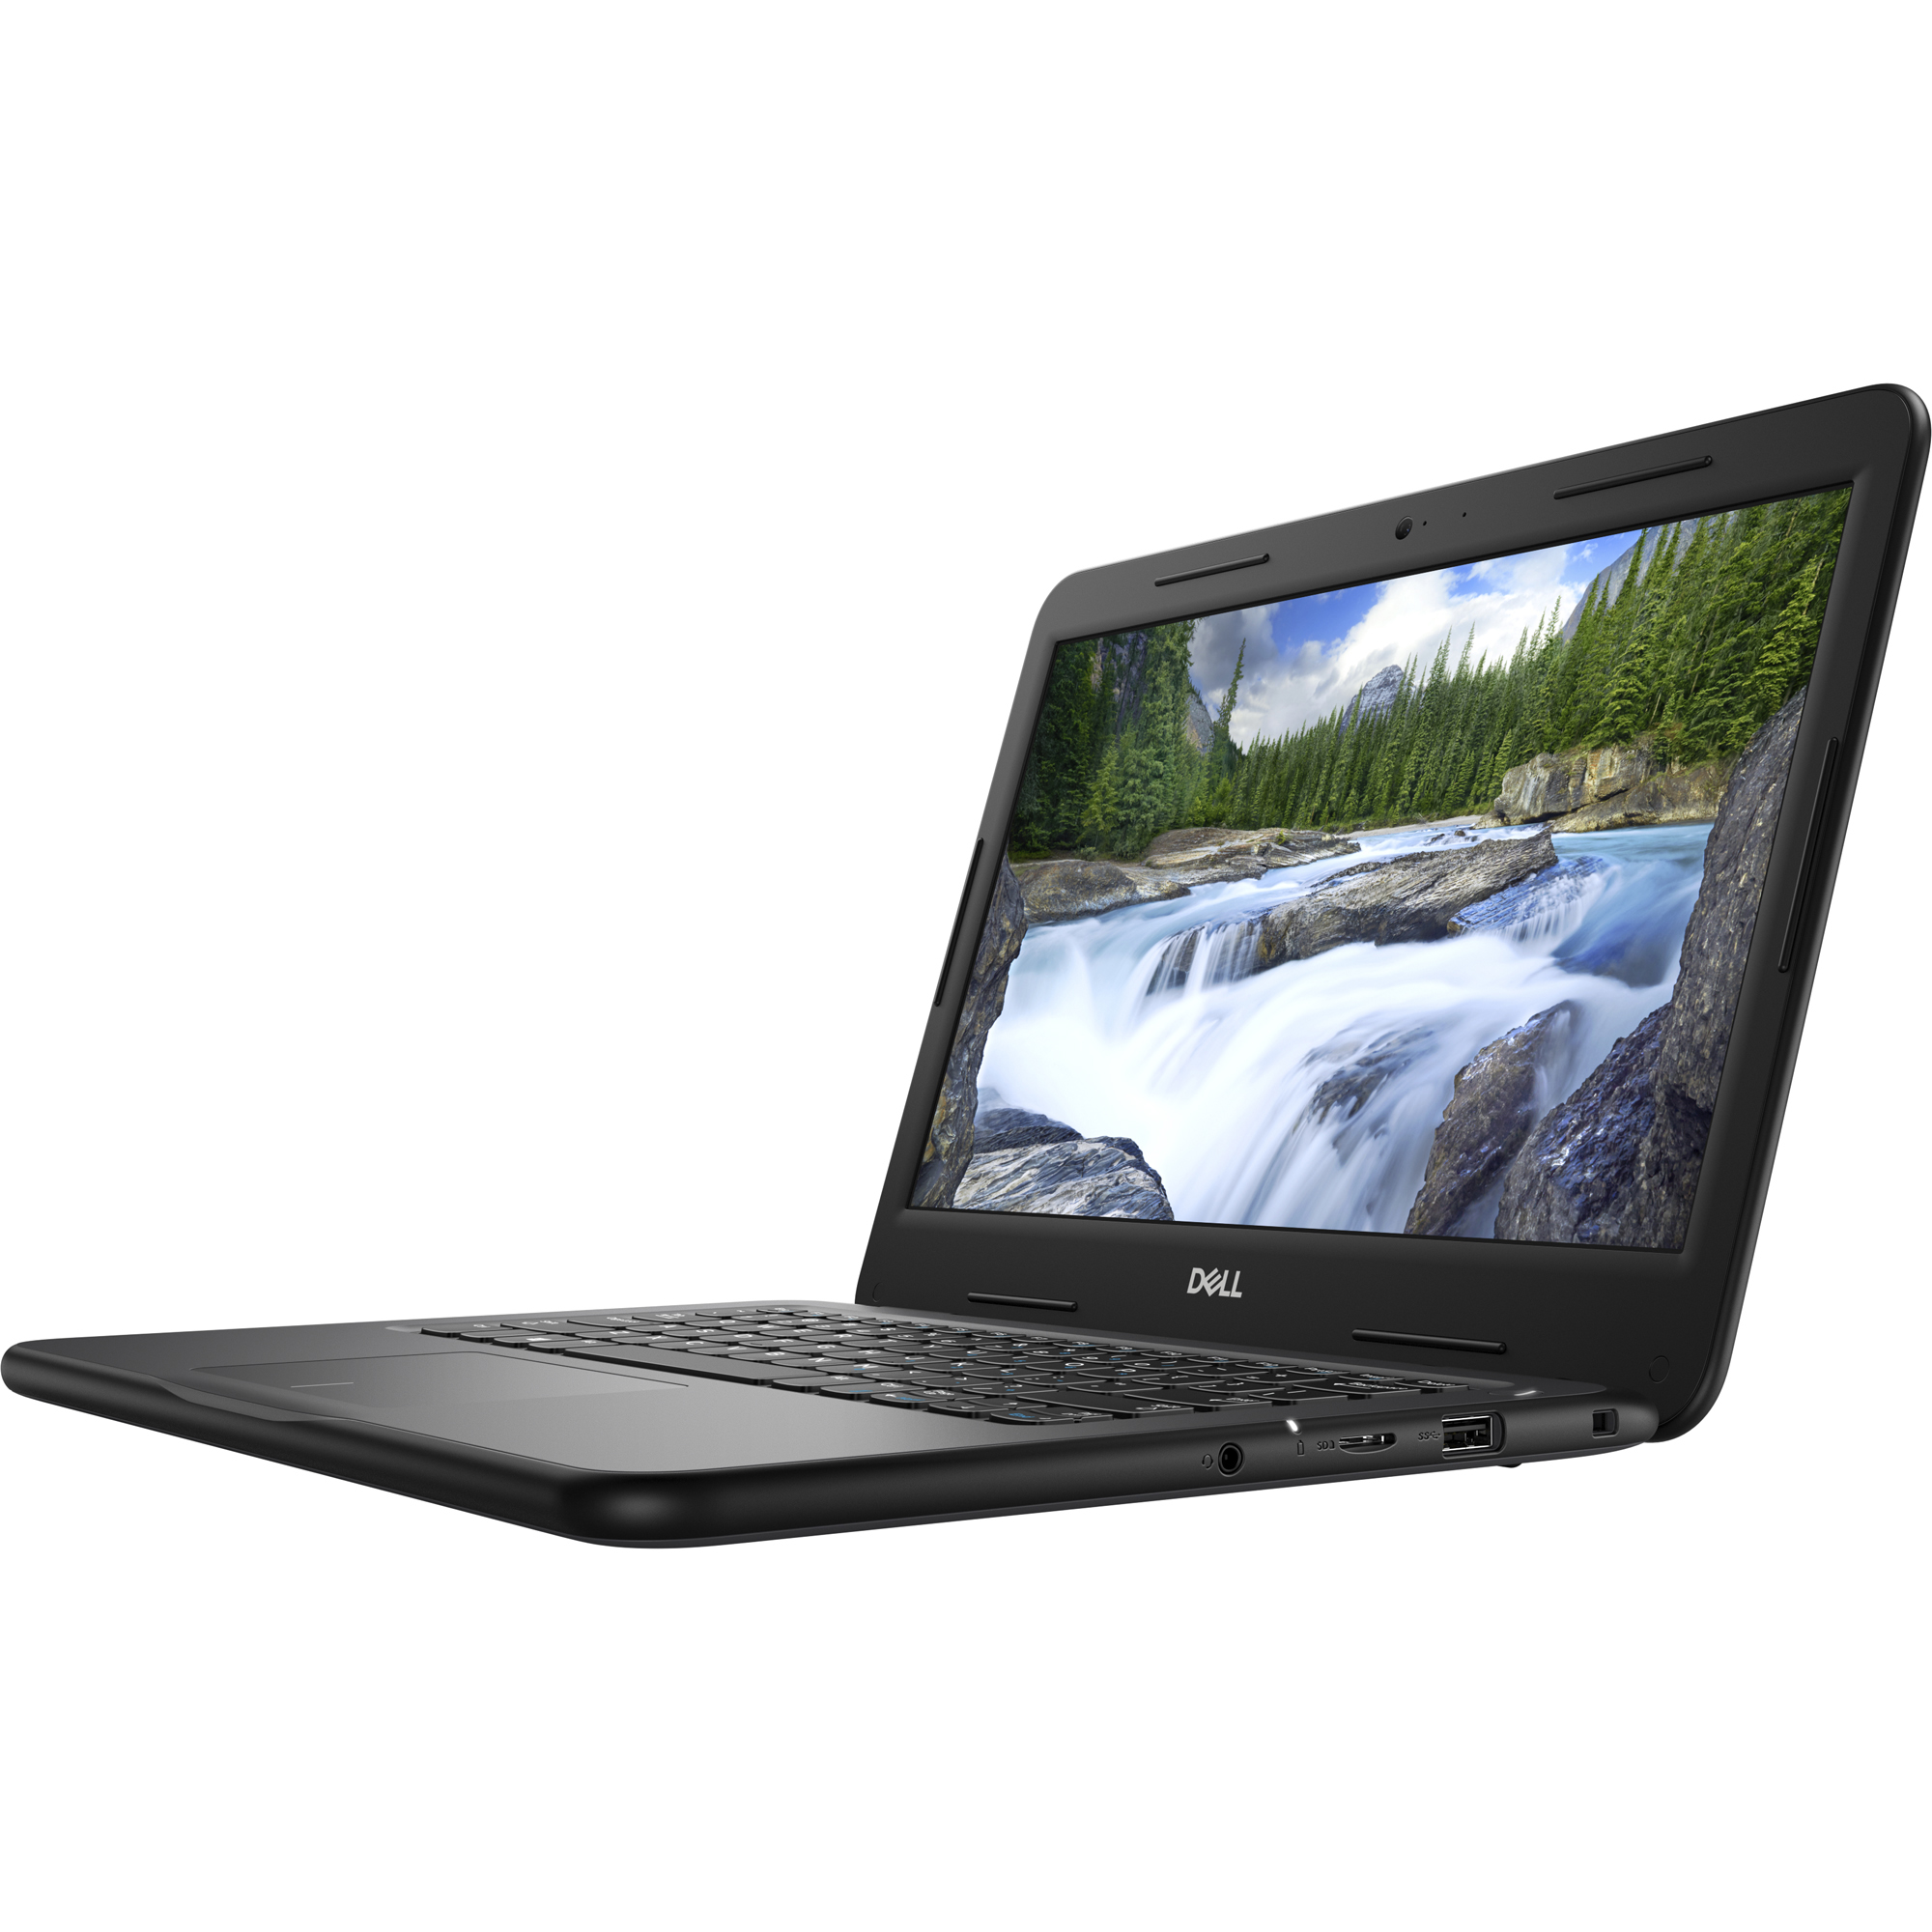 Dell Chromebook 11 3000 3100 11.6" 2 in 1 Chromebook - Intel Celeron N4020 - 4GB RAM - 32GB Flash Memory - 1366 x 768 - Intel HD Graphics - Chrome OS - Convertible - Black - image 2 of 5